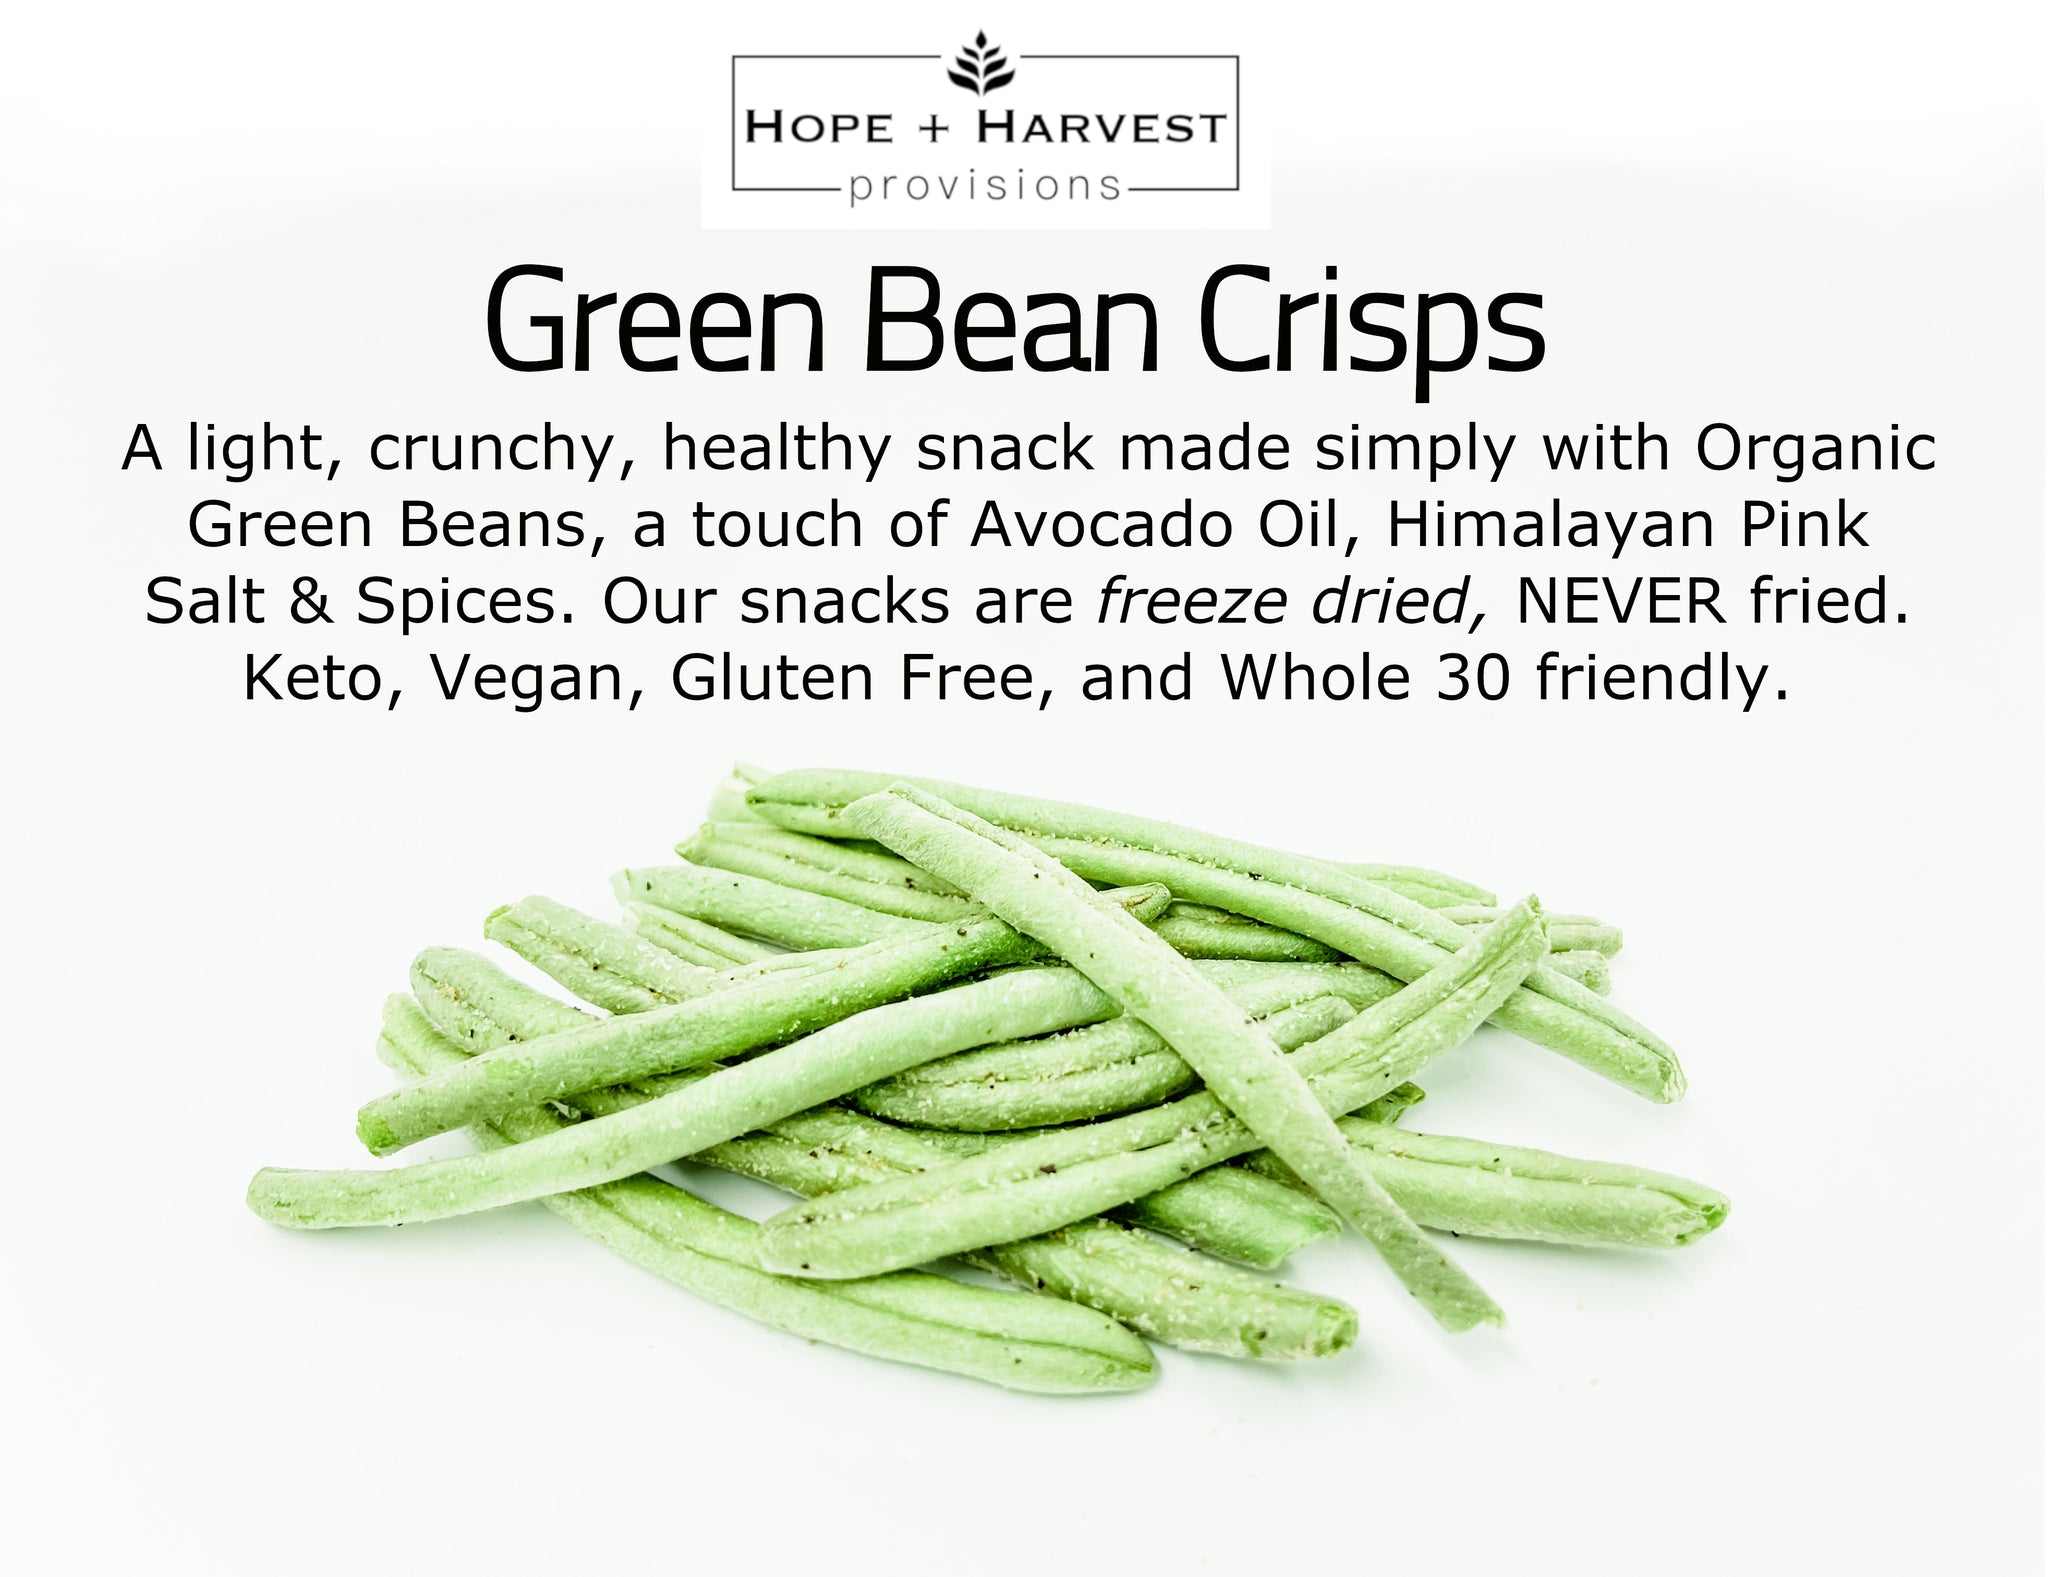 Green Bean Crisps - Freeze Dried Never Fried - Organic Veggie Snack